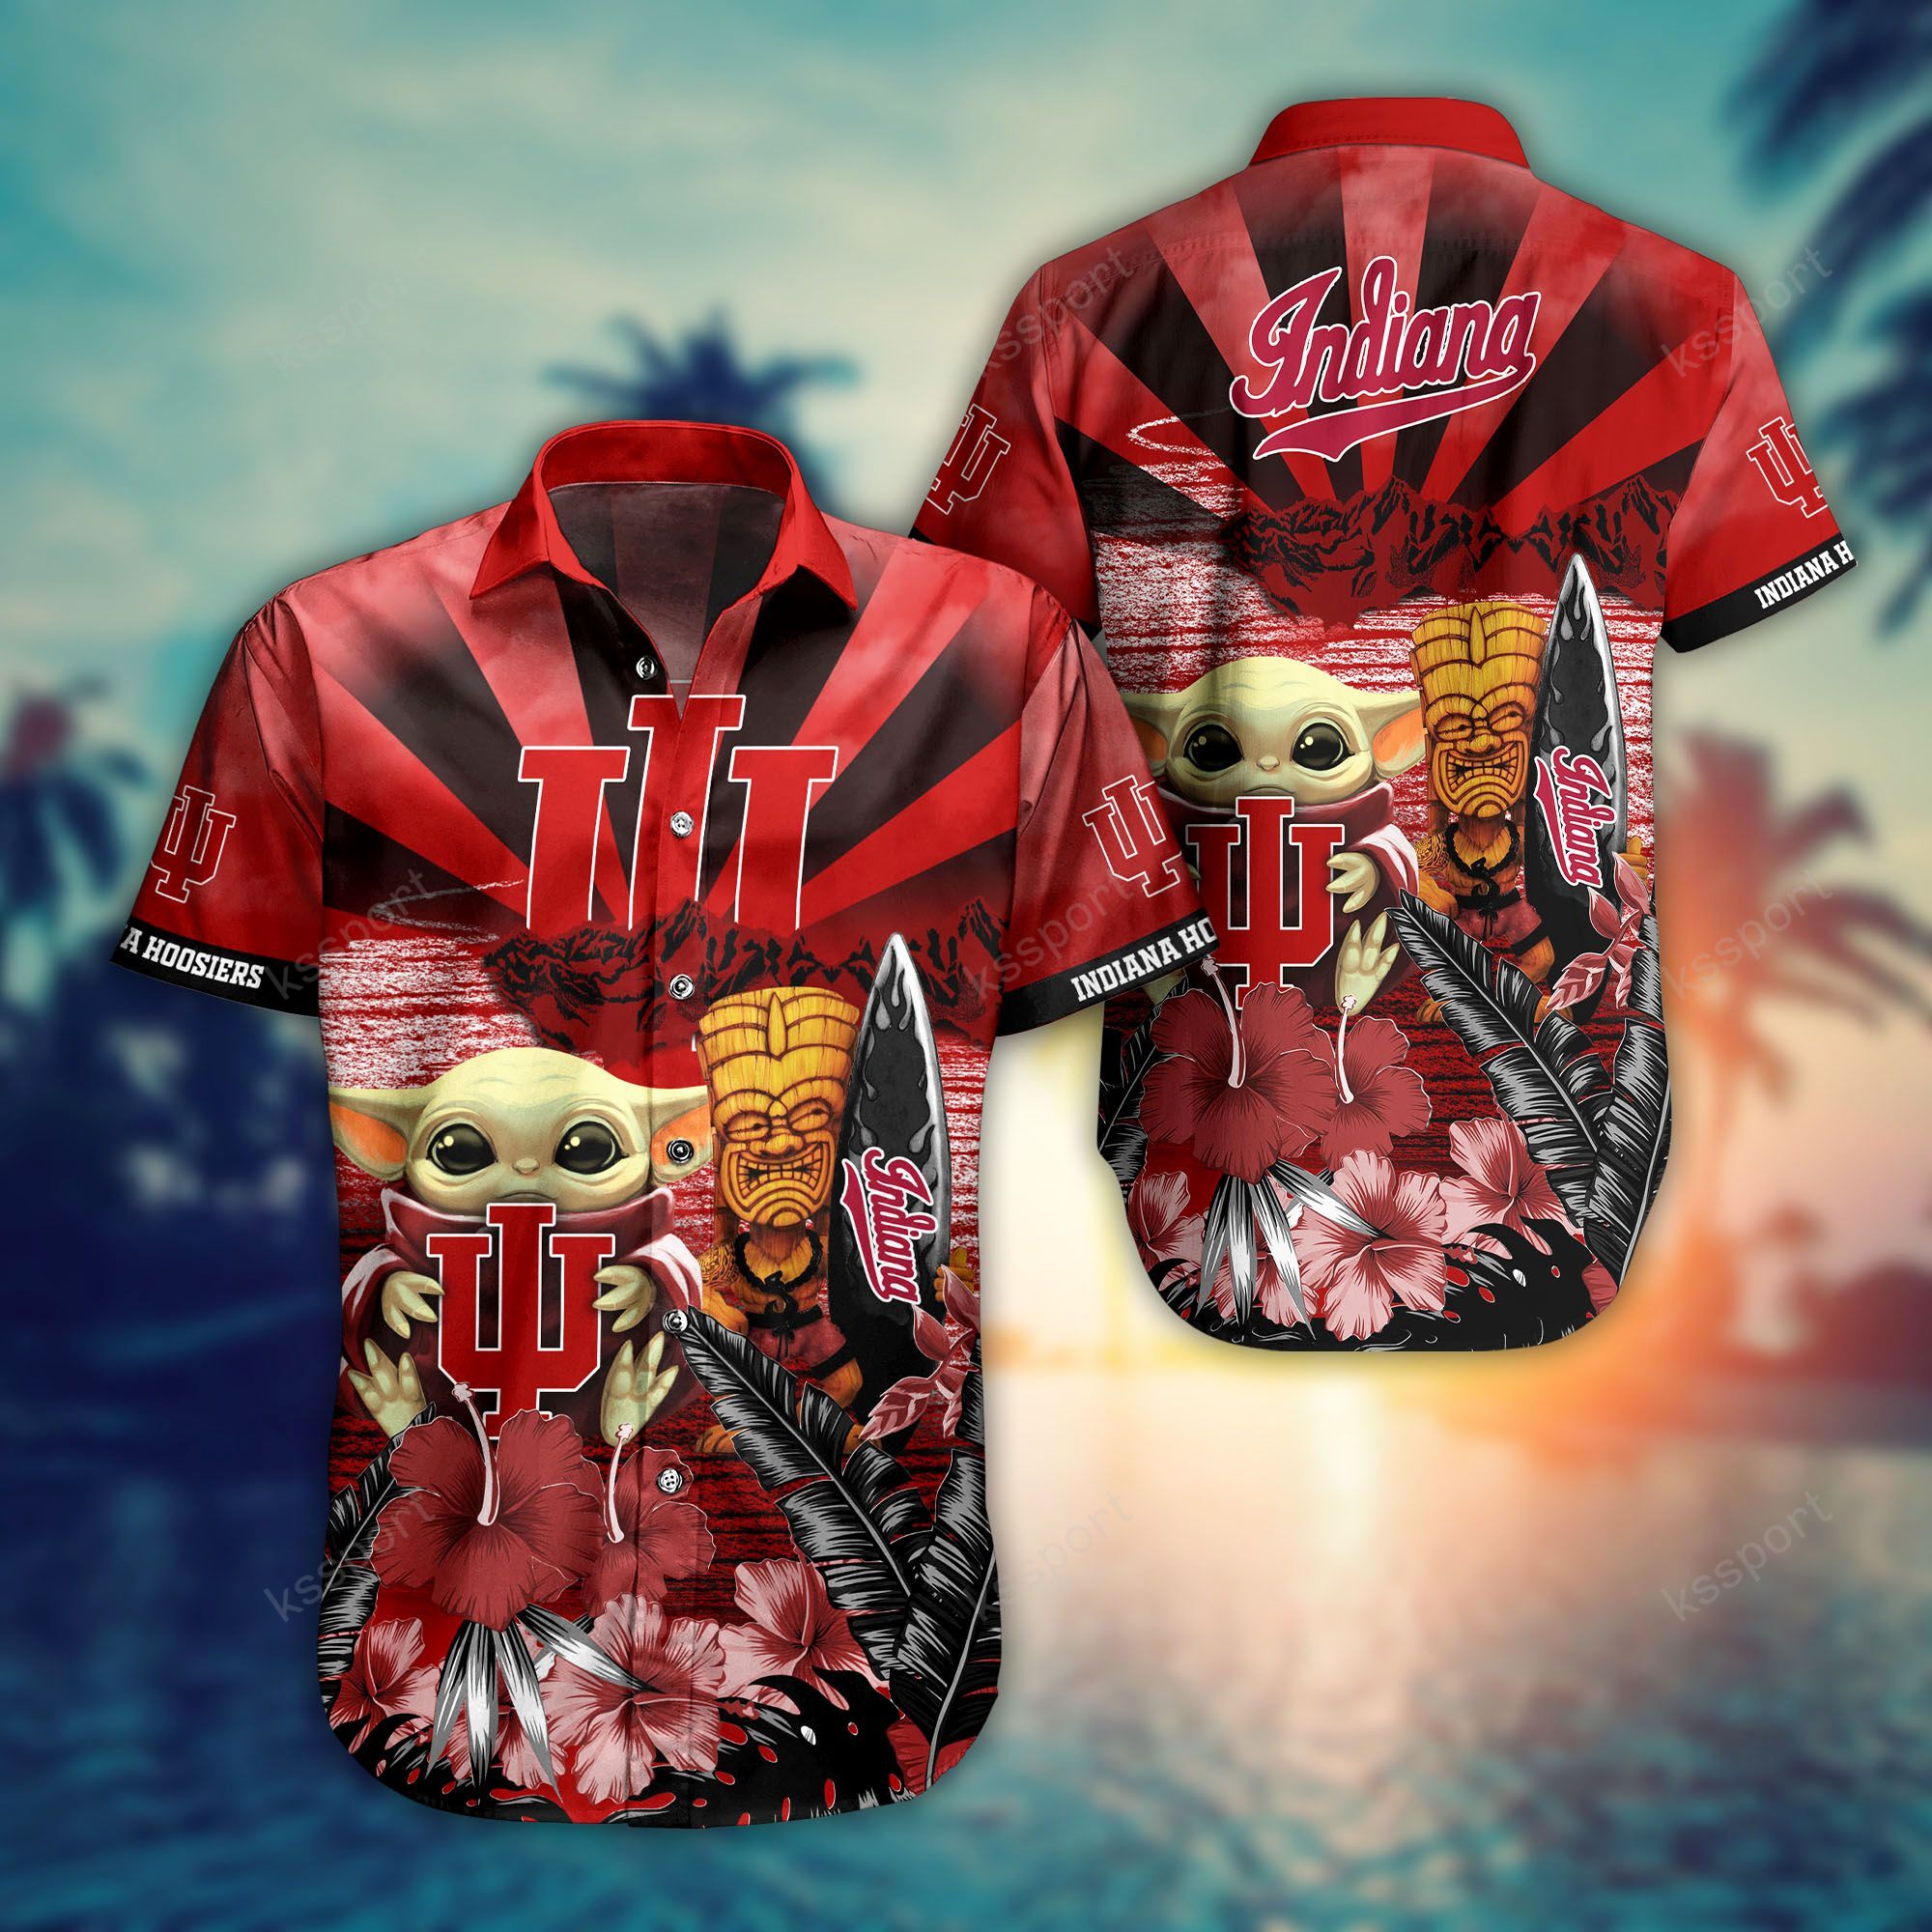 Buy These Hawaiian shirt to enjoy your summer 129